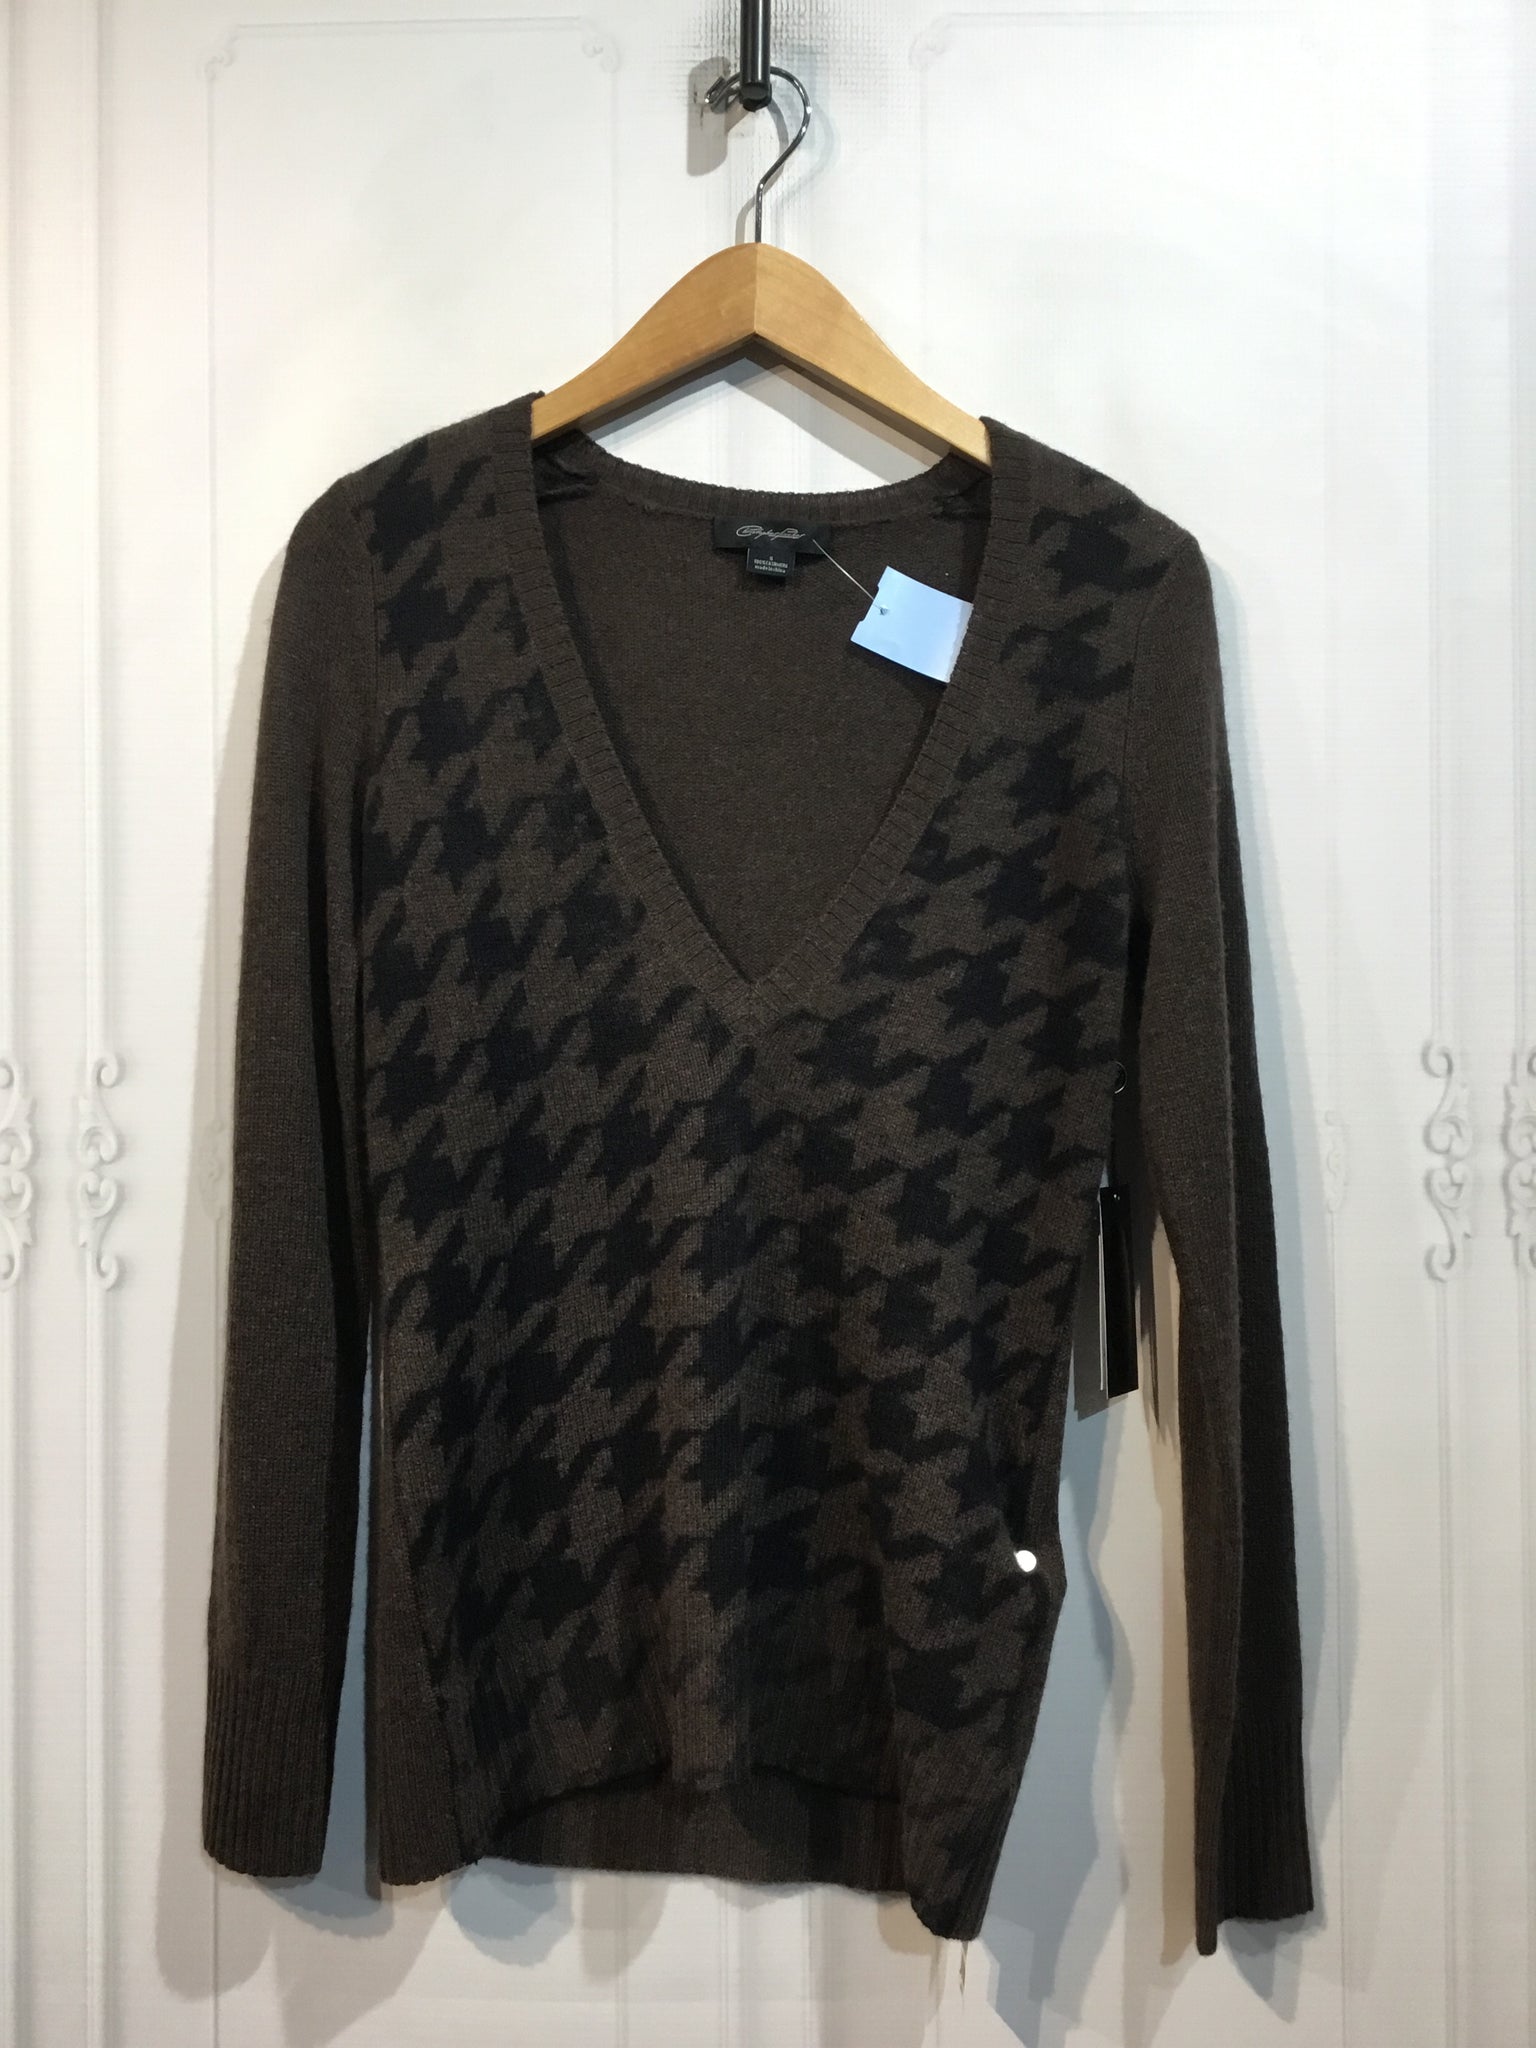 Christopher Fischer Size S/4-6 Brown & Black Sweater